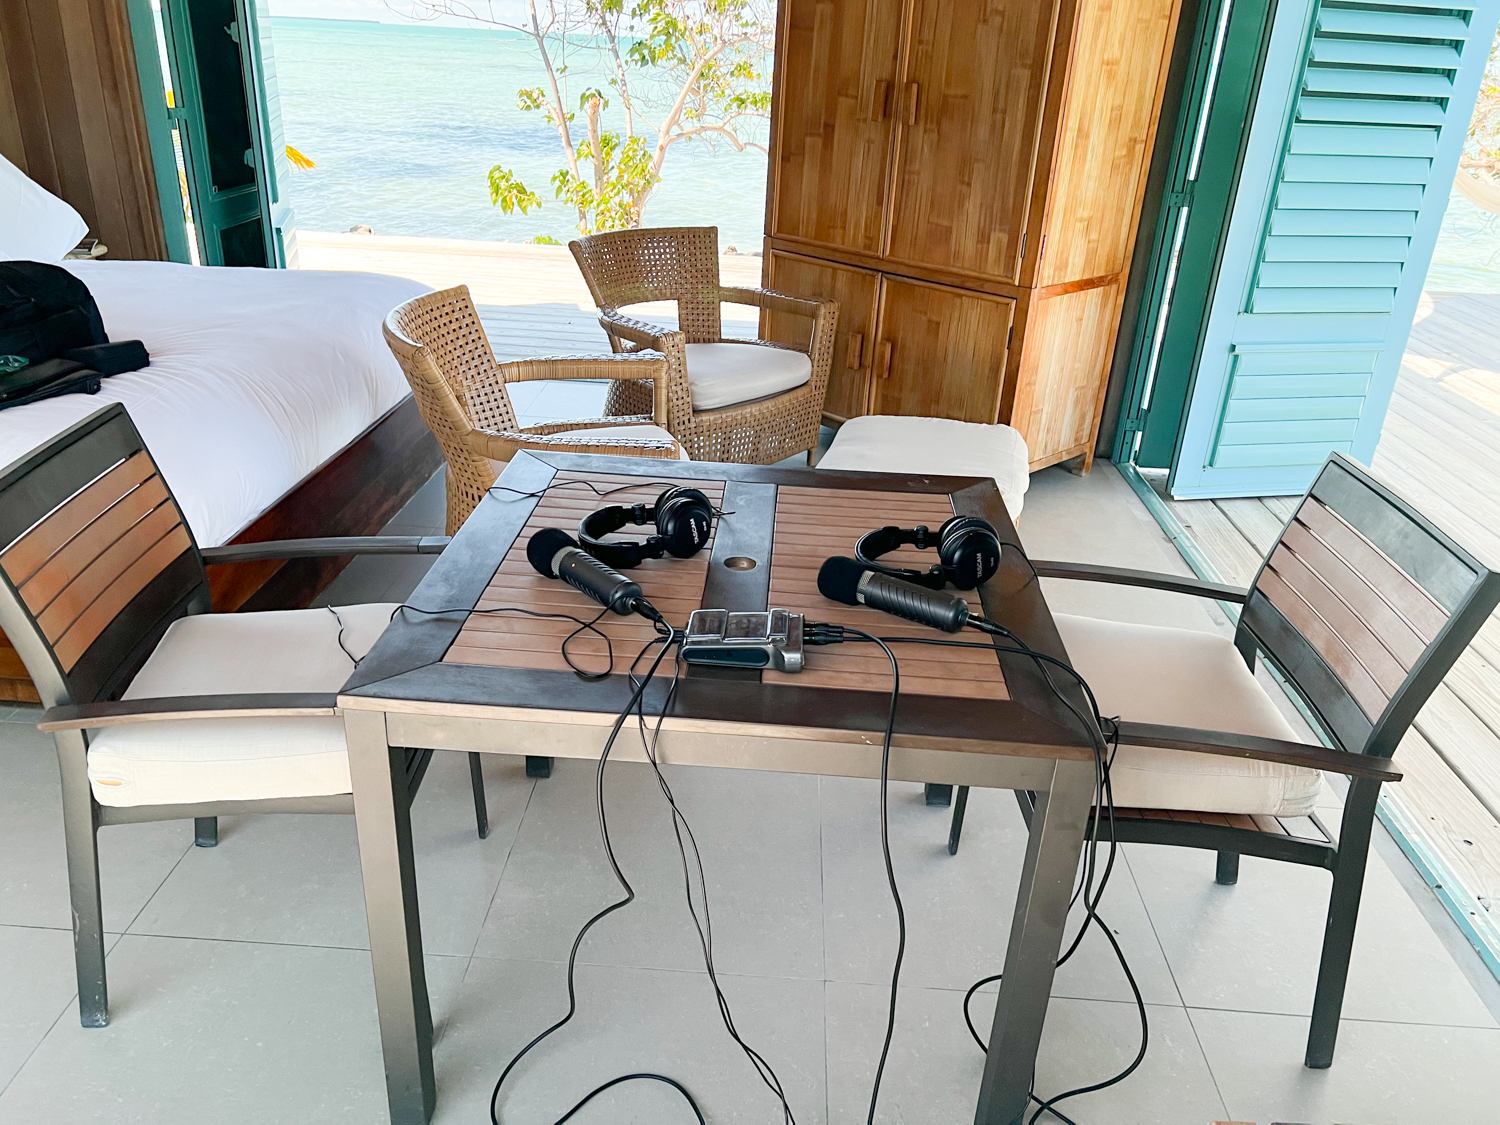 Executive Chef Patrick Houghton Cayo Espanto - a Luxury Private Island Resort Off The Coast of Belize ~ Culinary Treasure Podcast Episode 99 